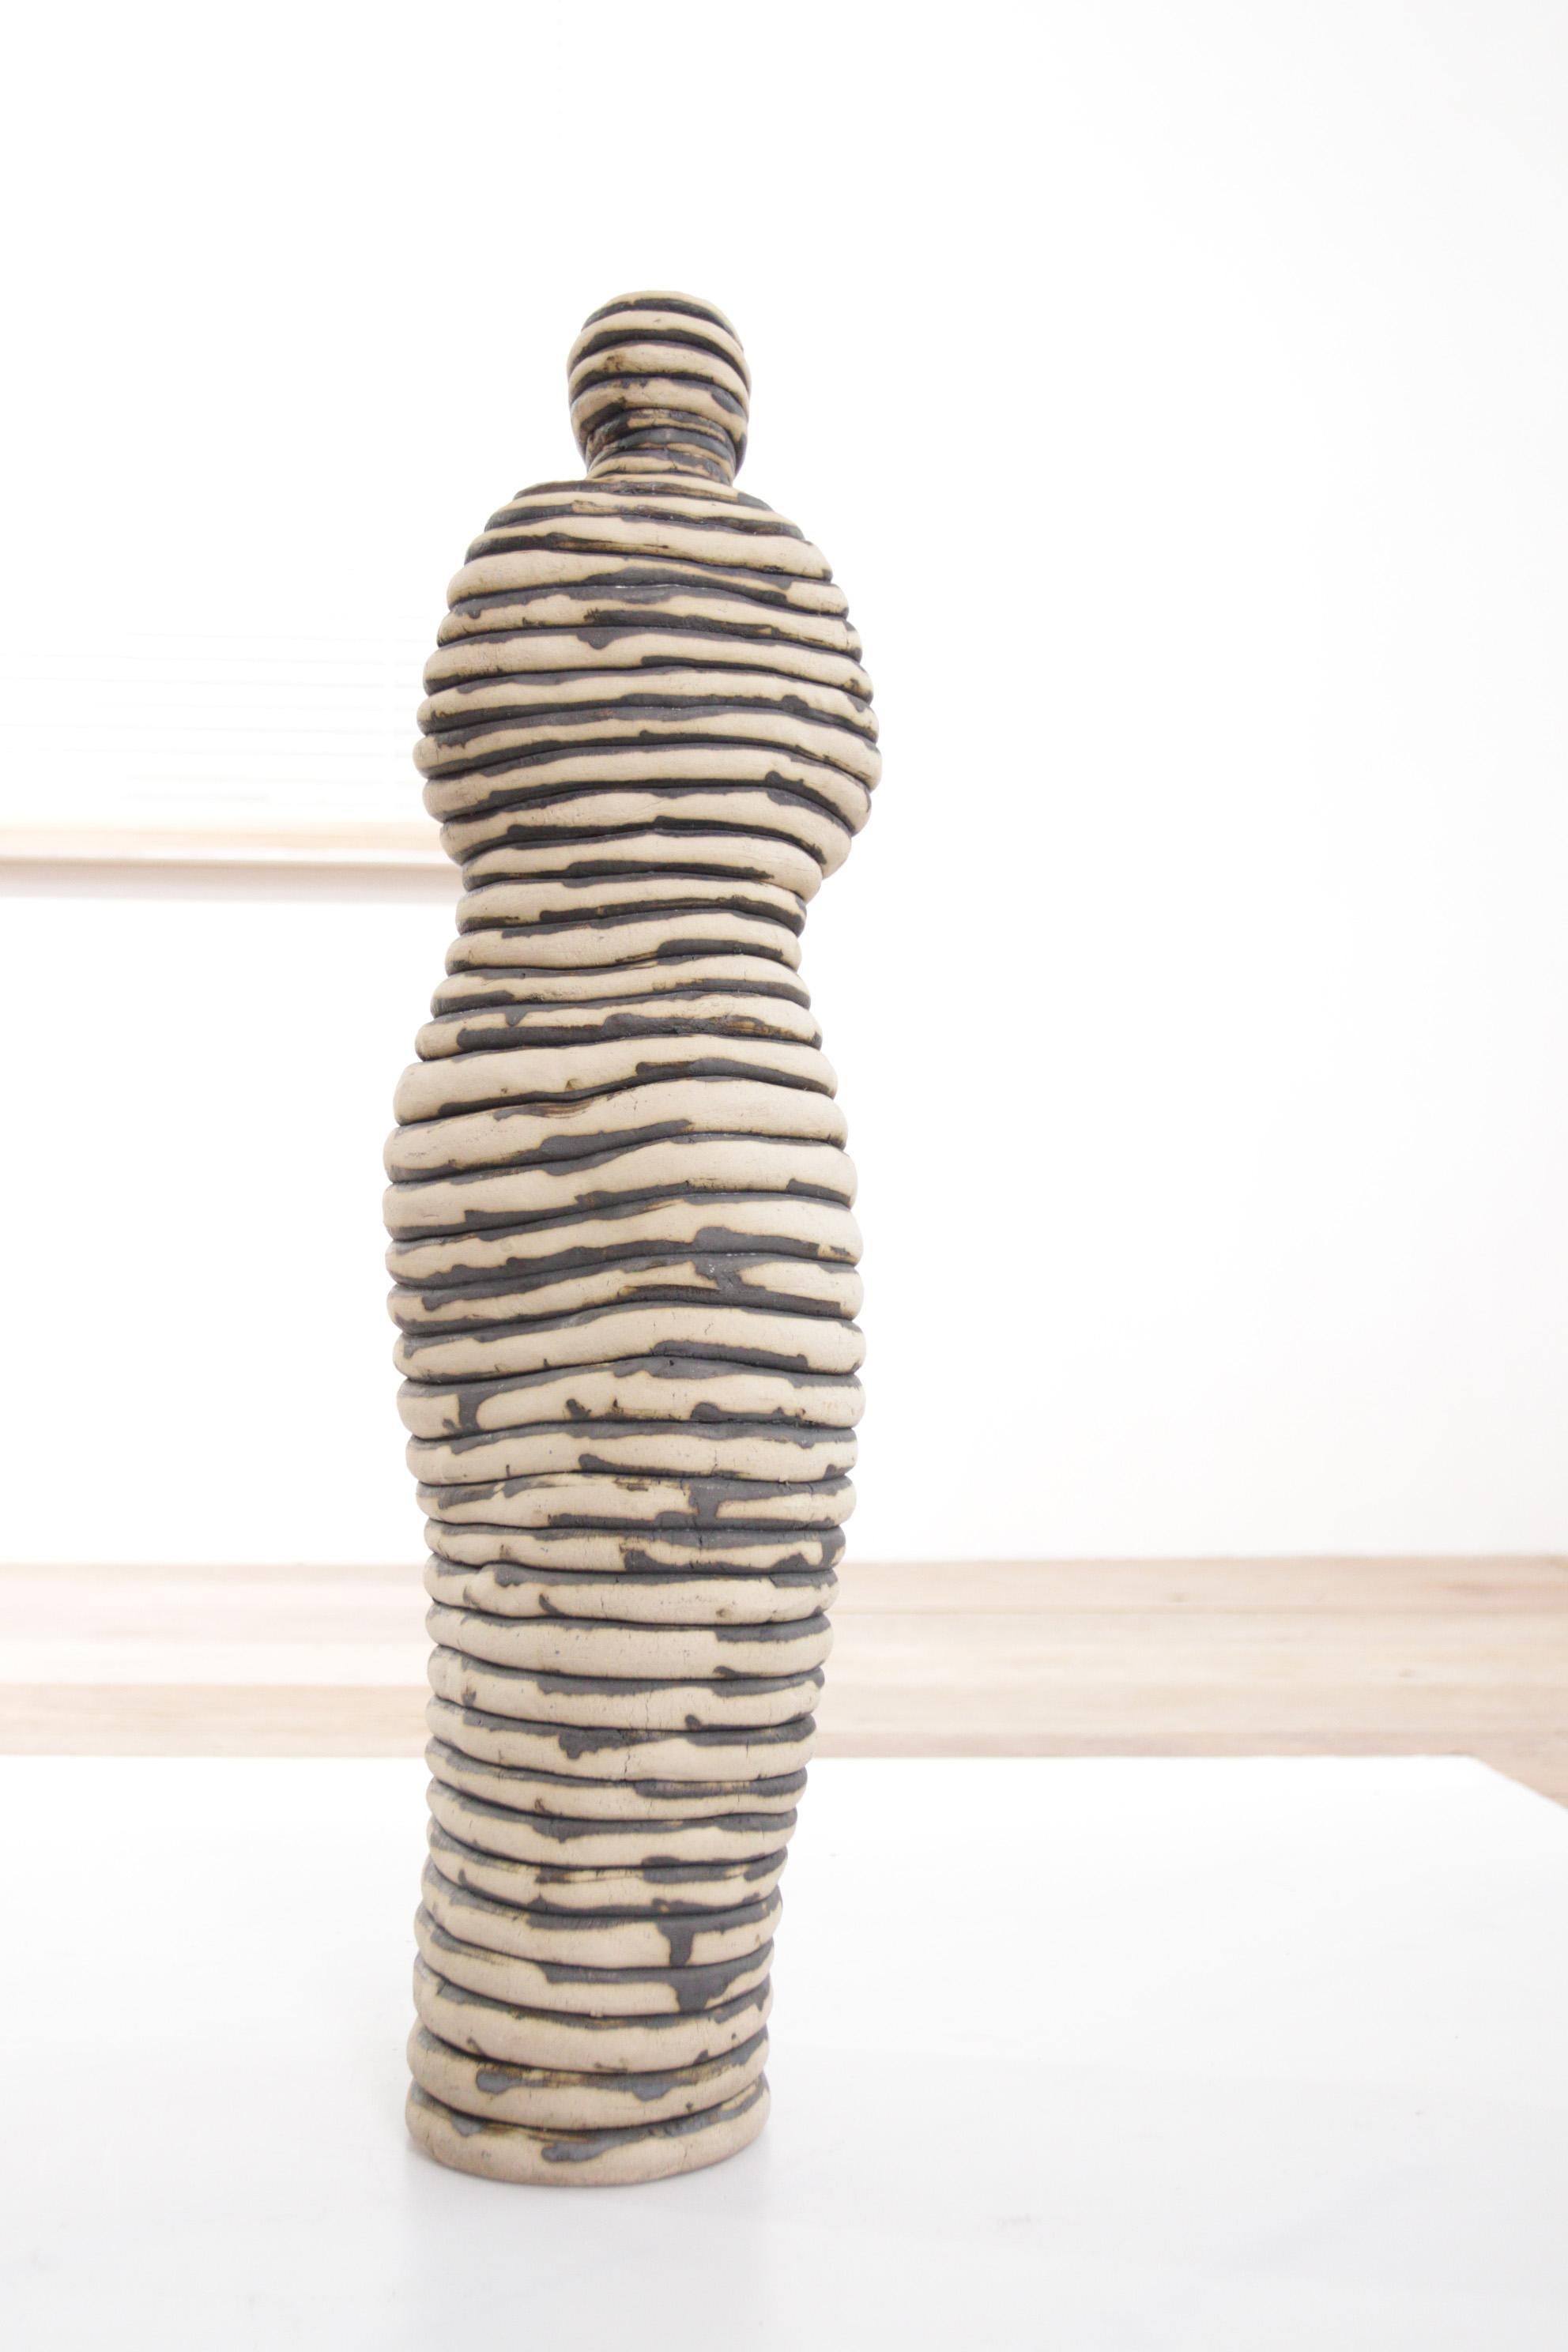 Andrea Dogterom Ceramic Sculpture Women in Stripes 1